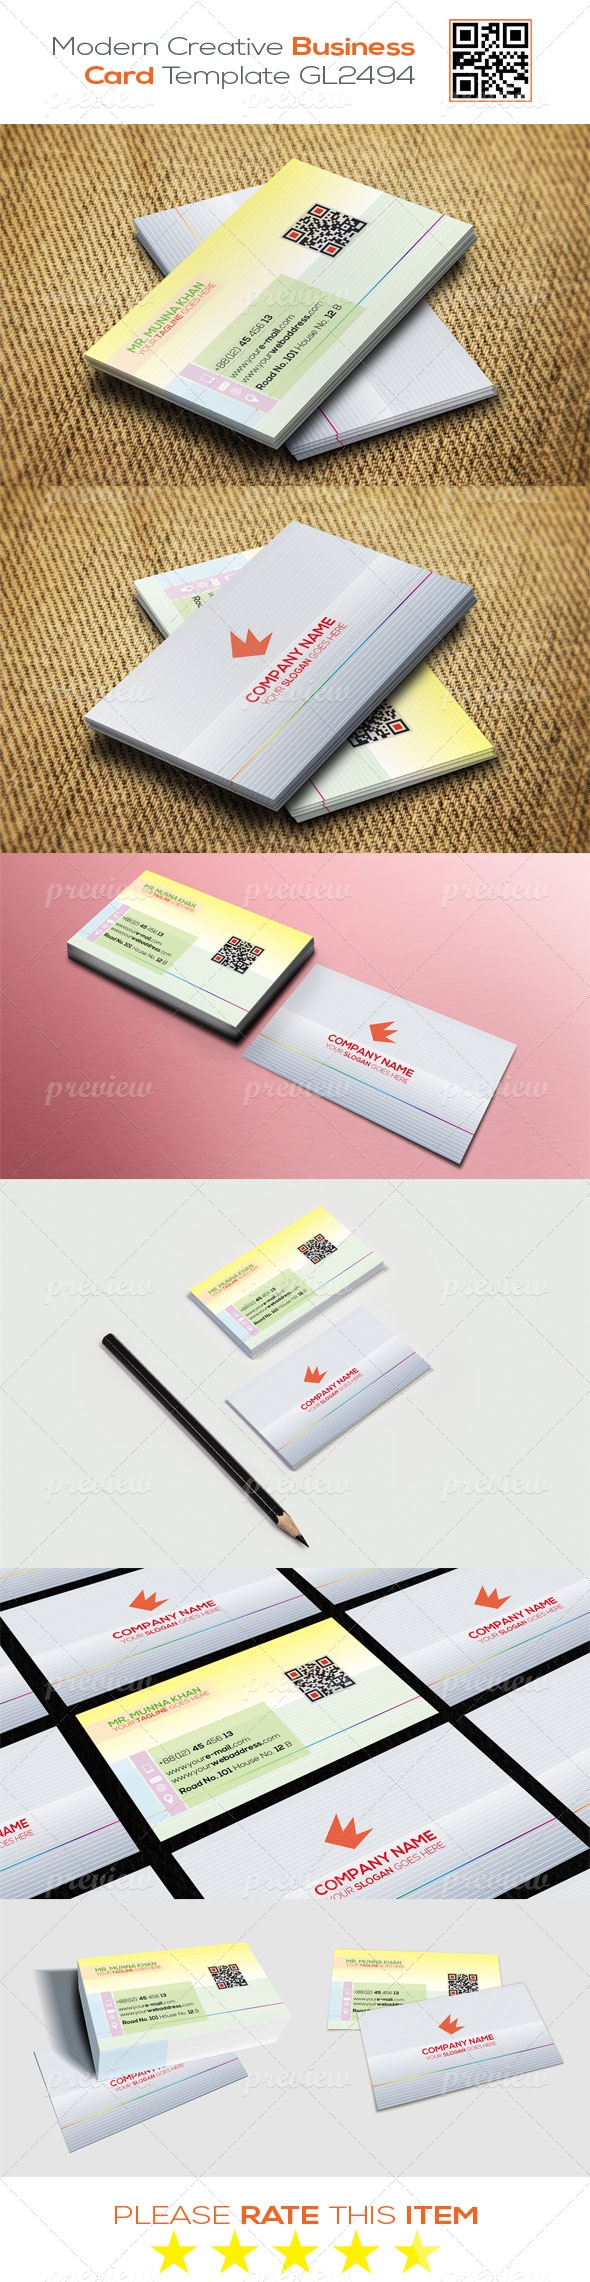 Modern Creative Business Card Template GL2494